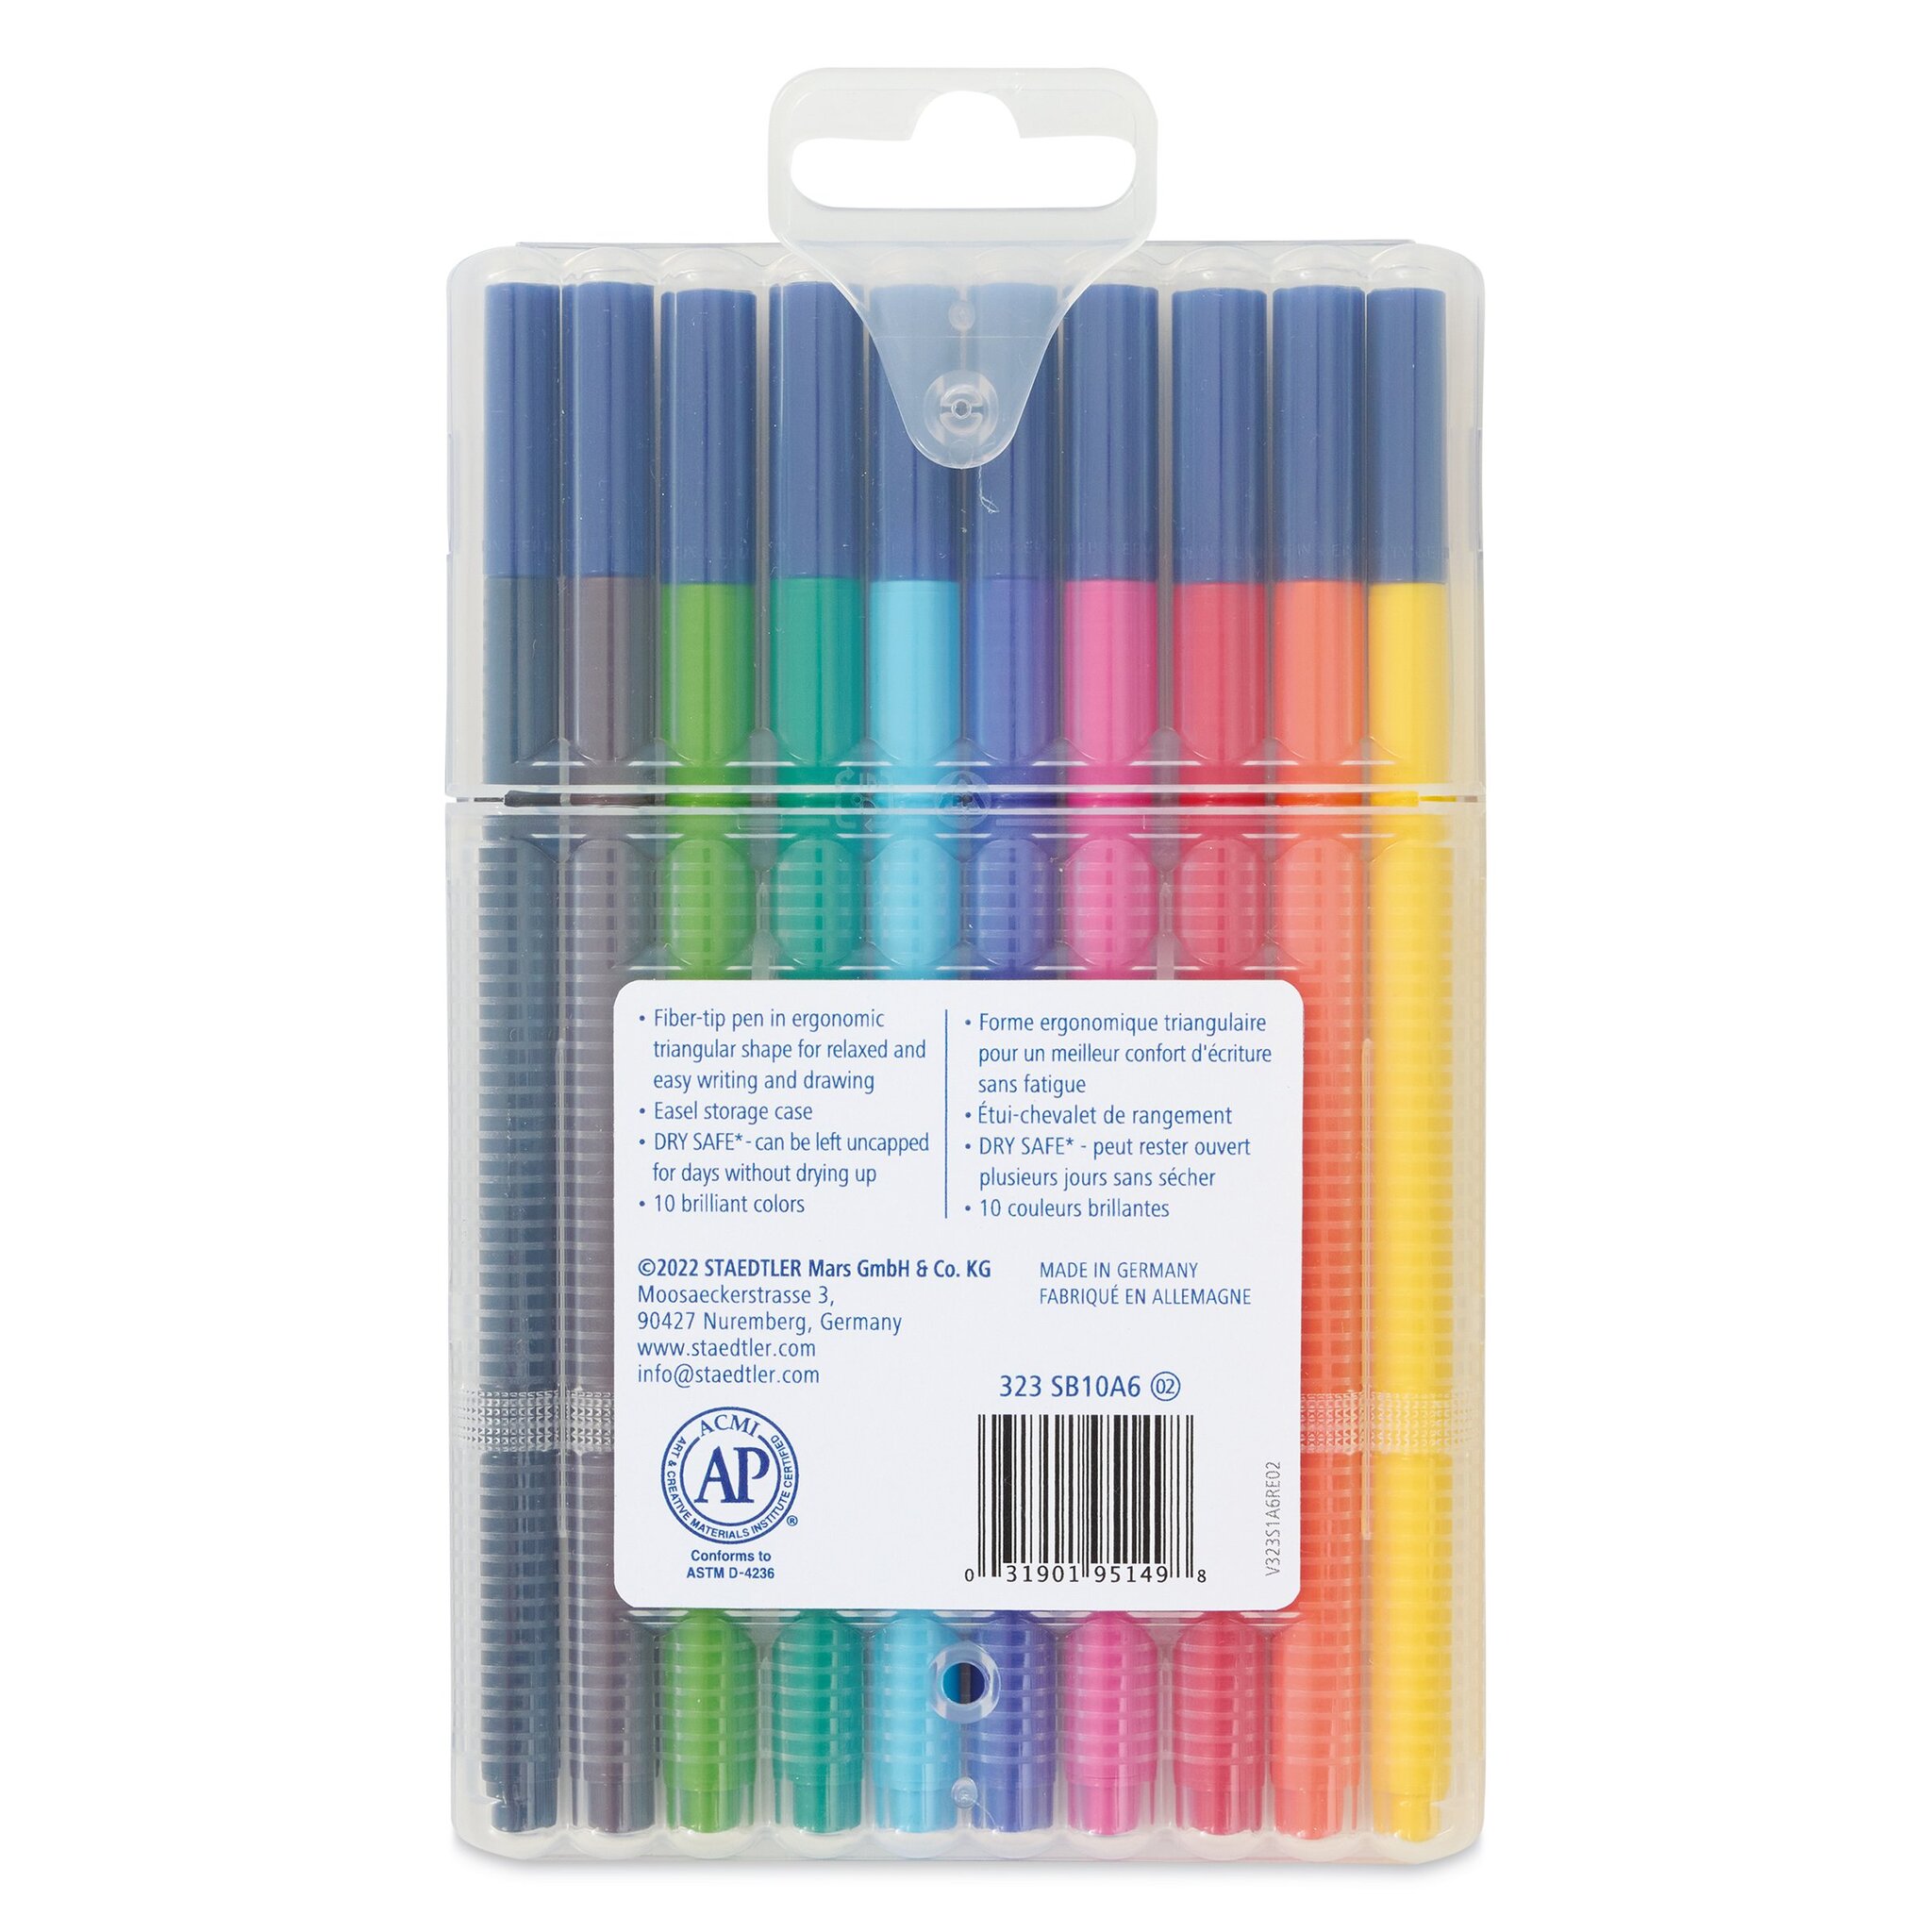 Staedtler Triplus Broadliner Felt Tip Pen - Assorted Colors, Set